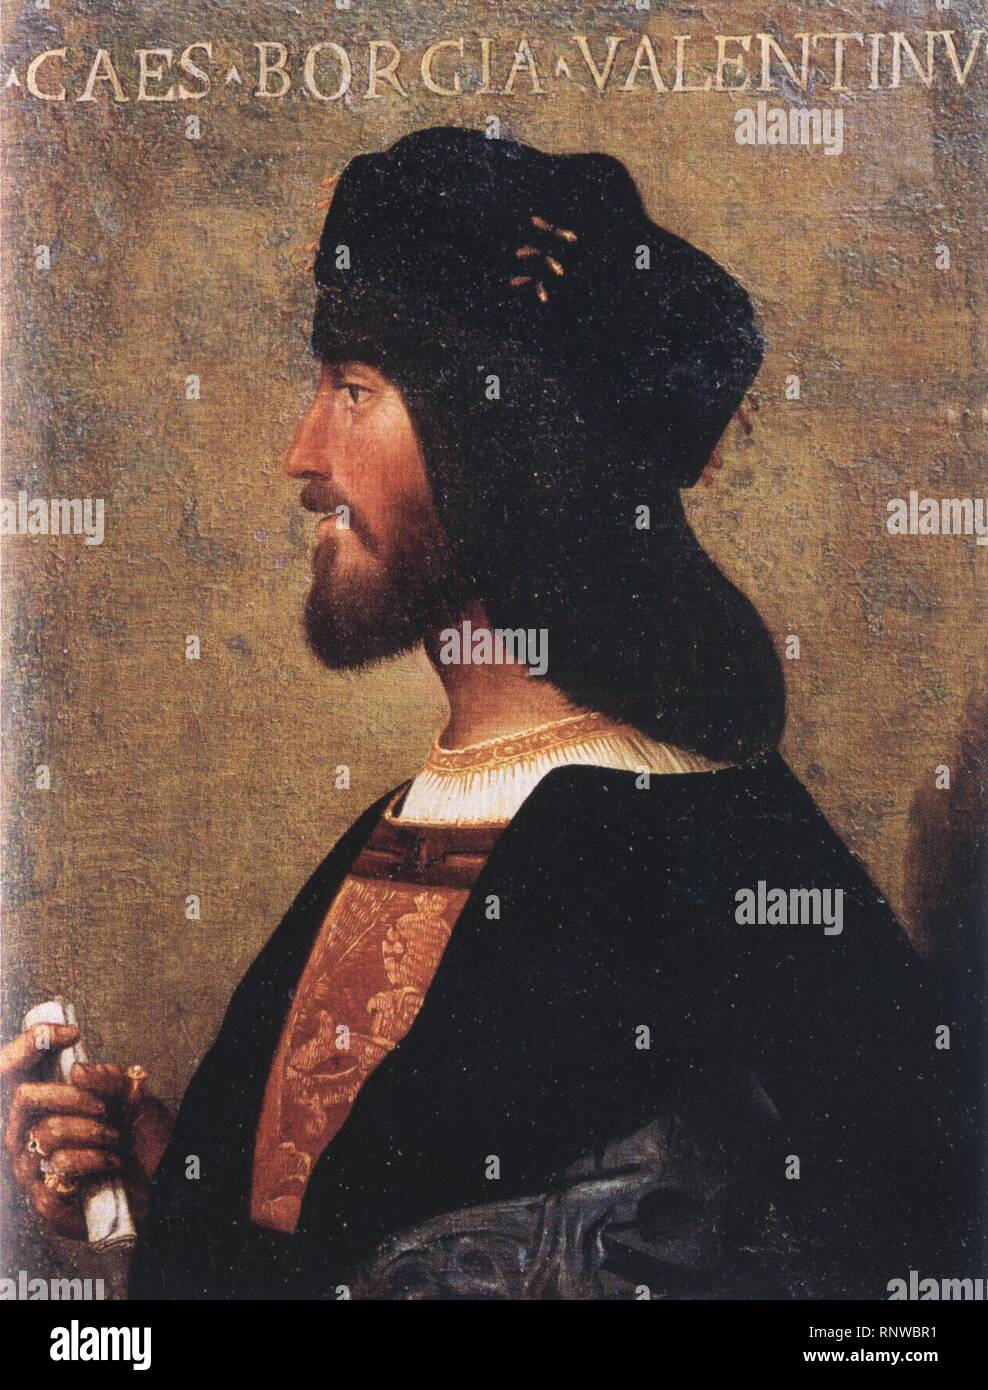 Cesare Borgia, Duke of Valentinois. Stock Photo